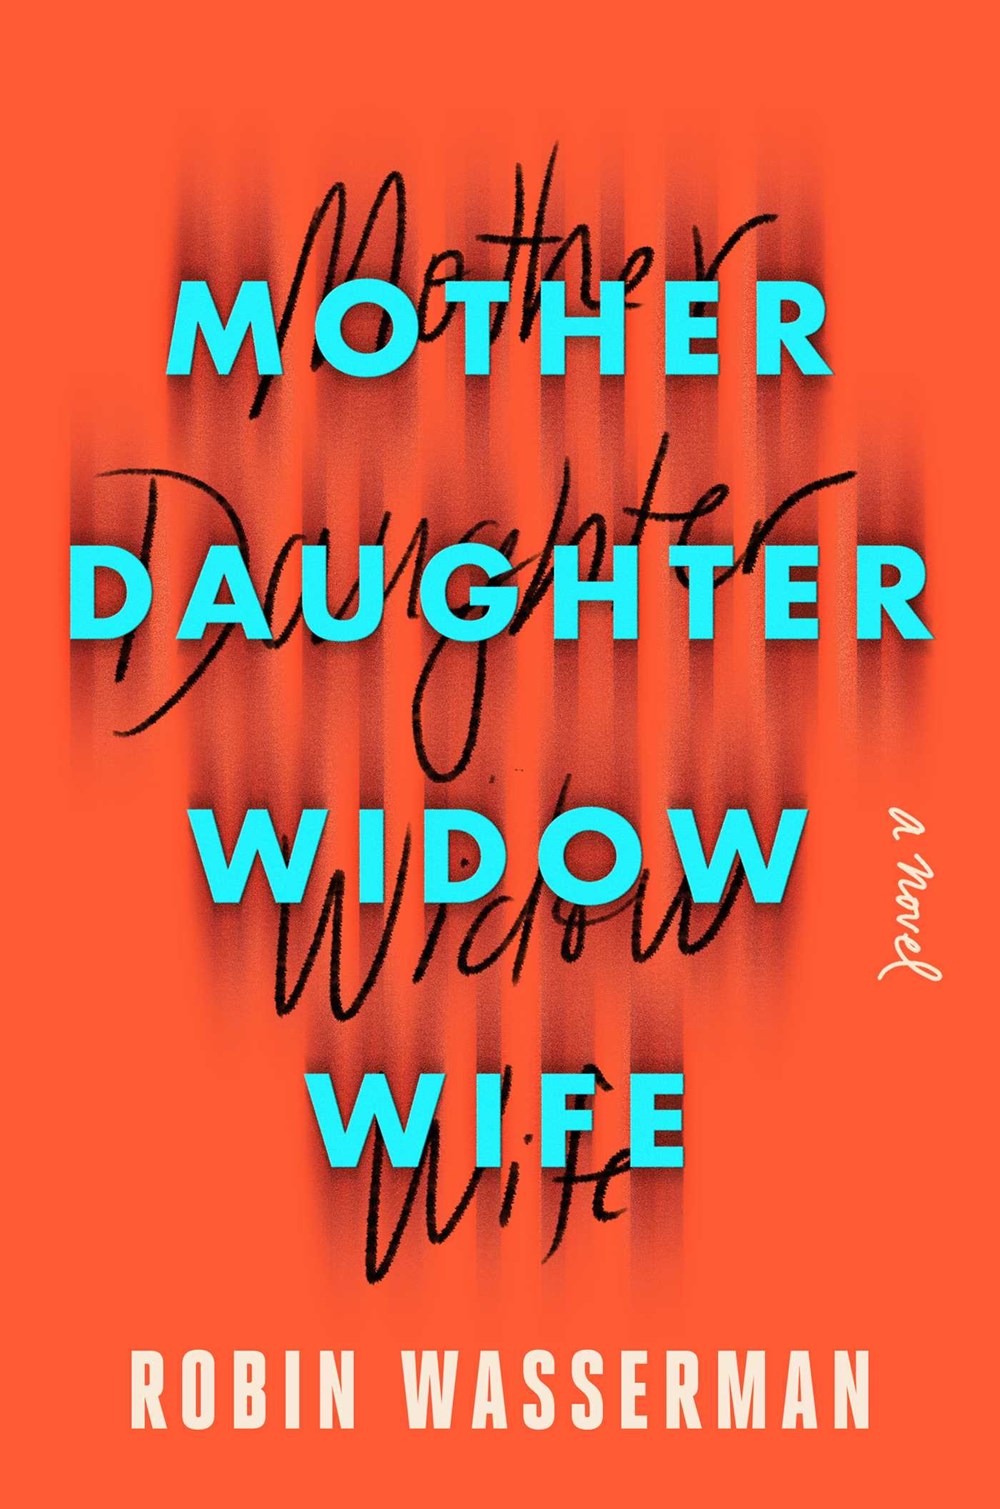 [EPUB] Mother Daughter Widow Wife by Robin Wasserman